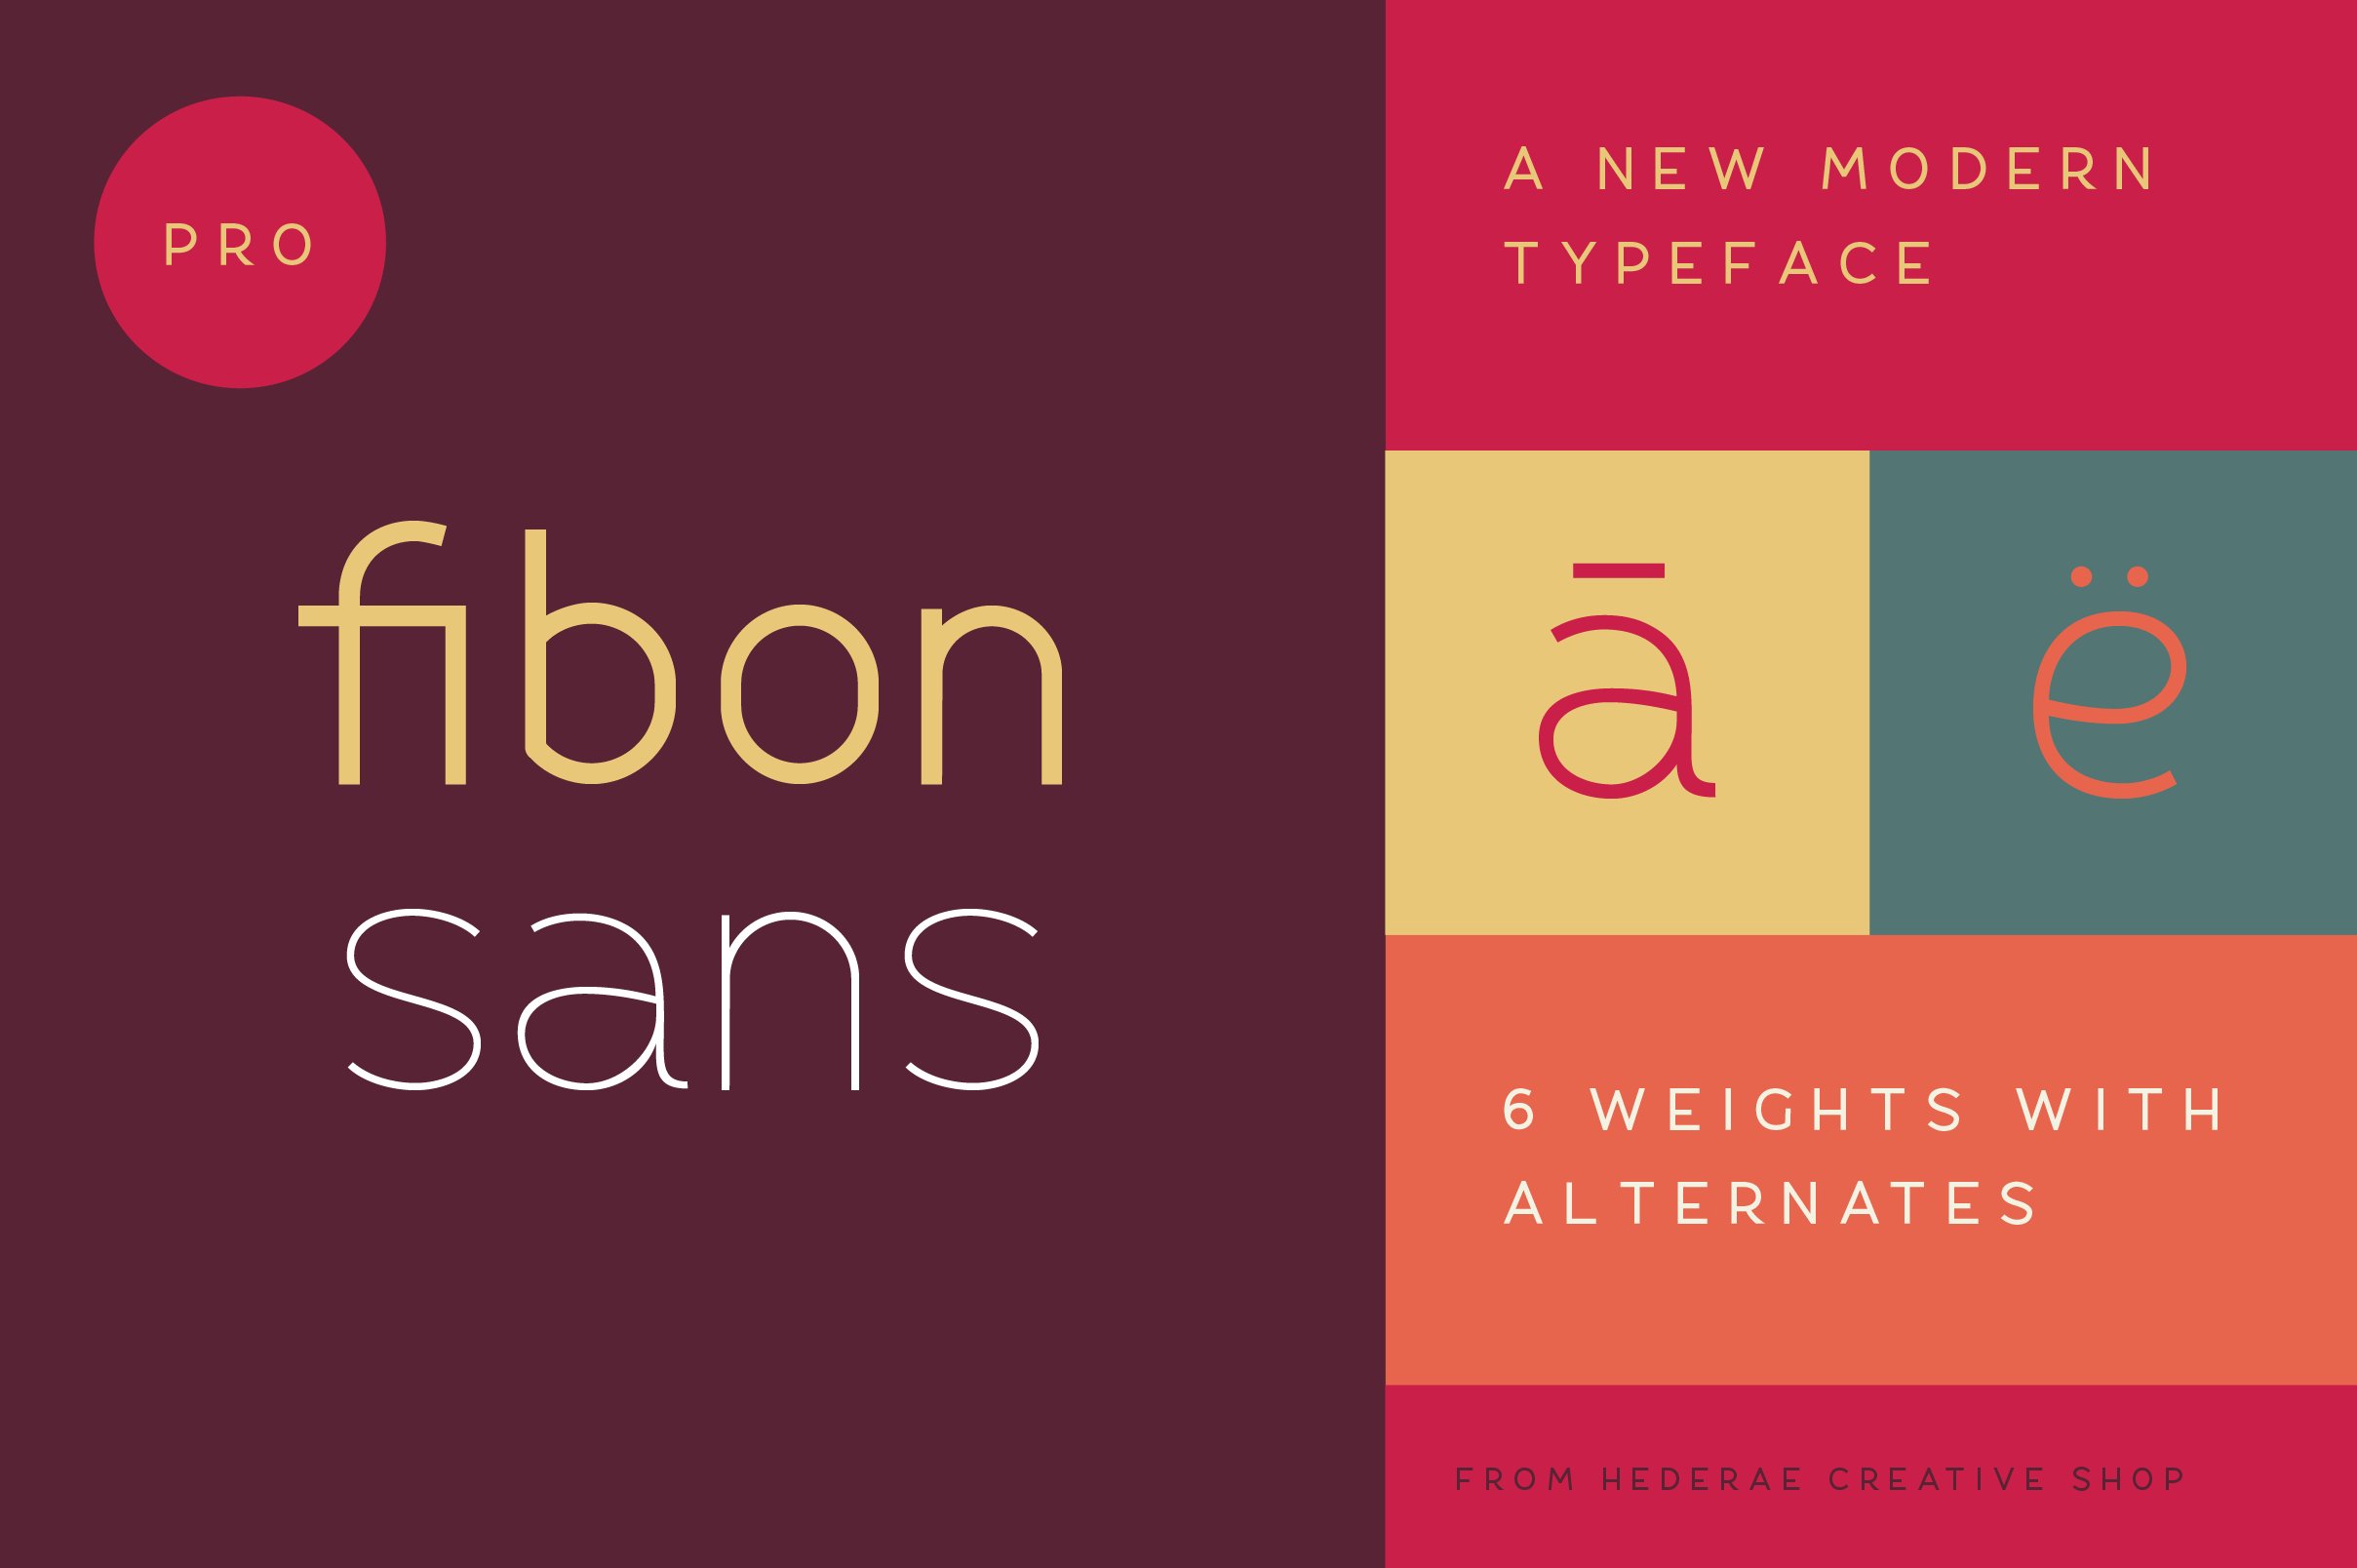 Fibon Sans Font Family cover image.